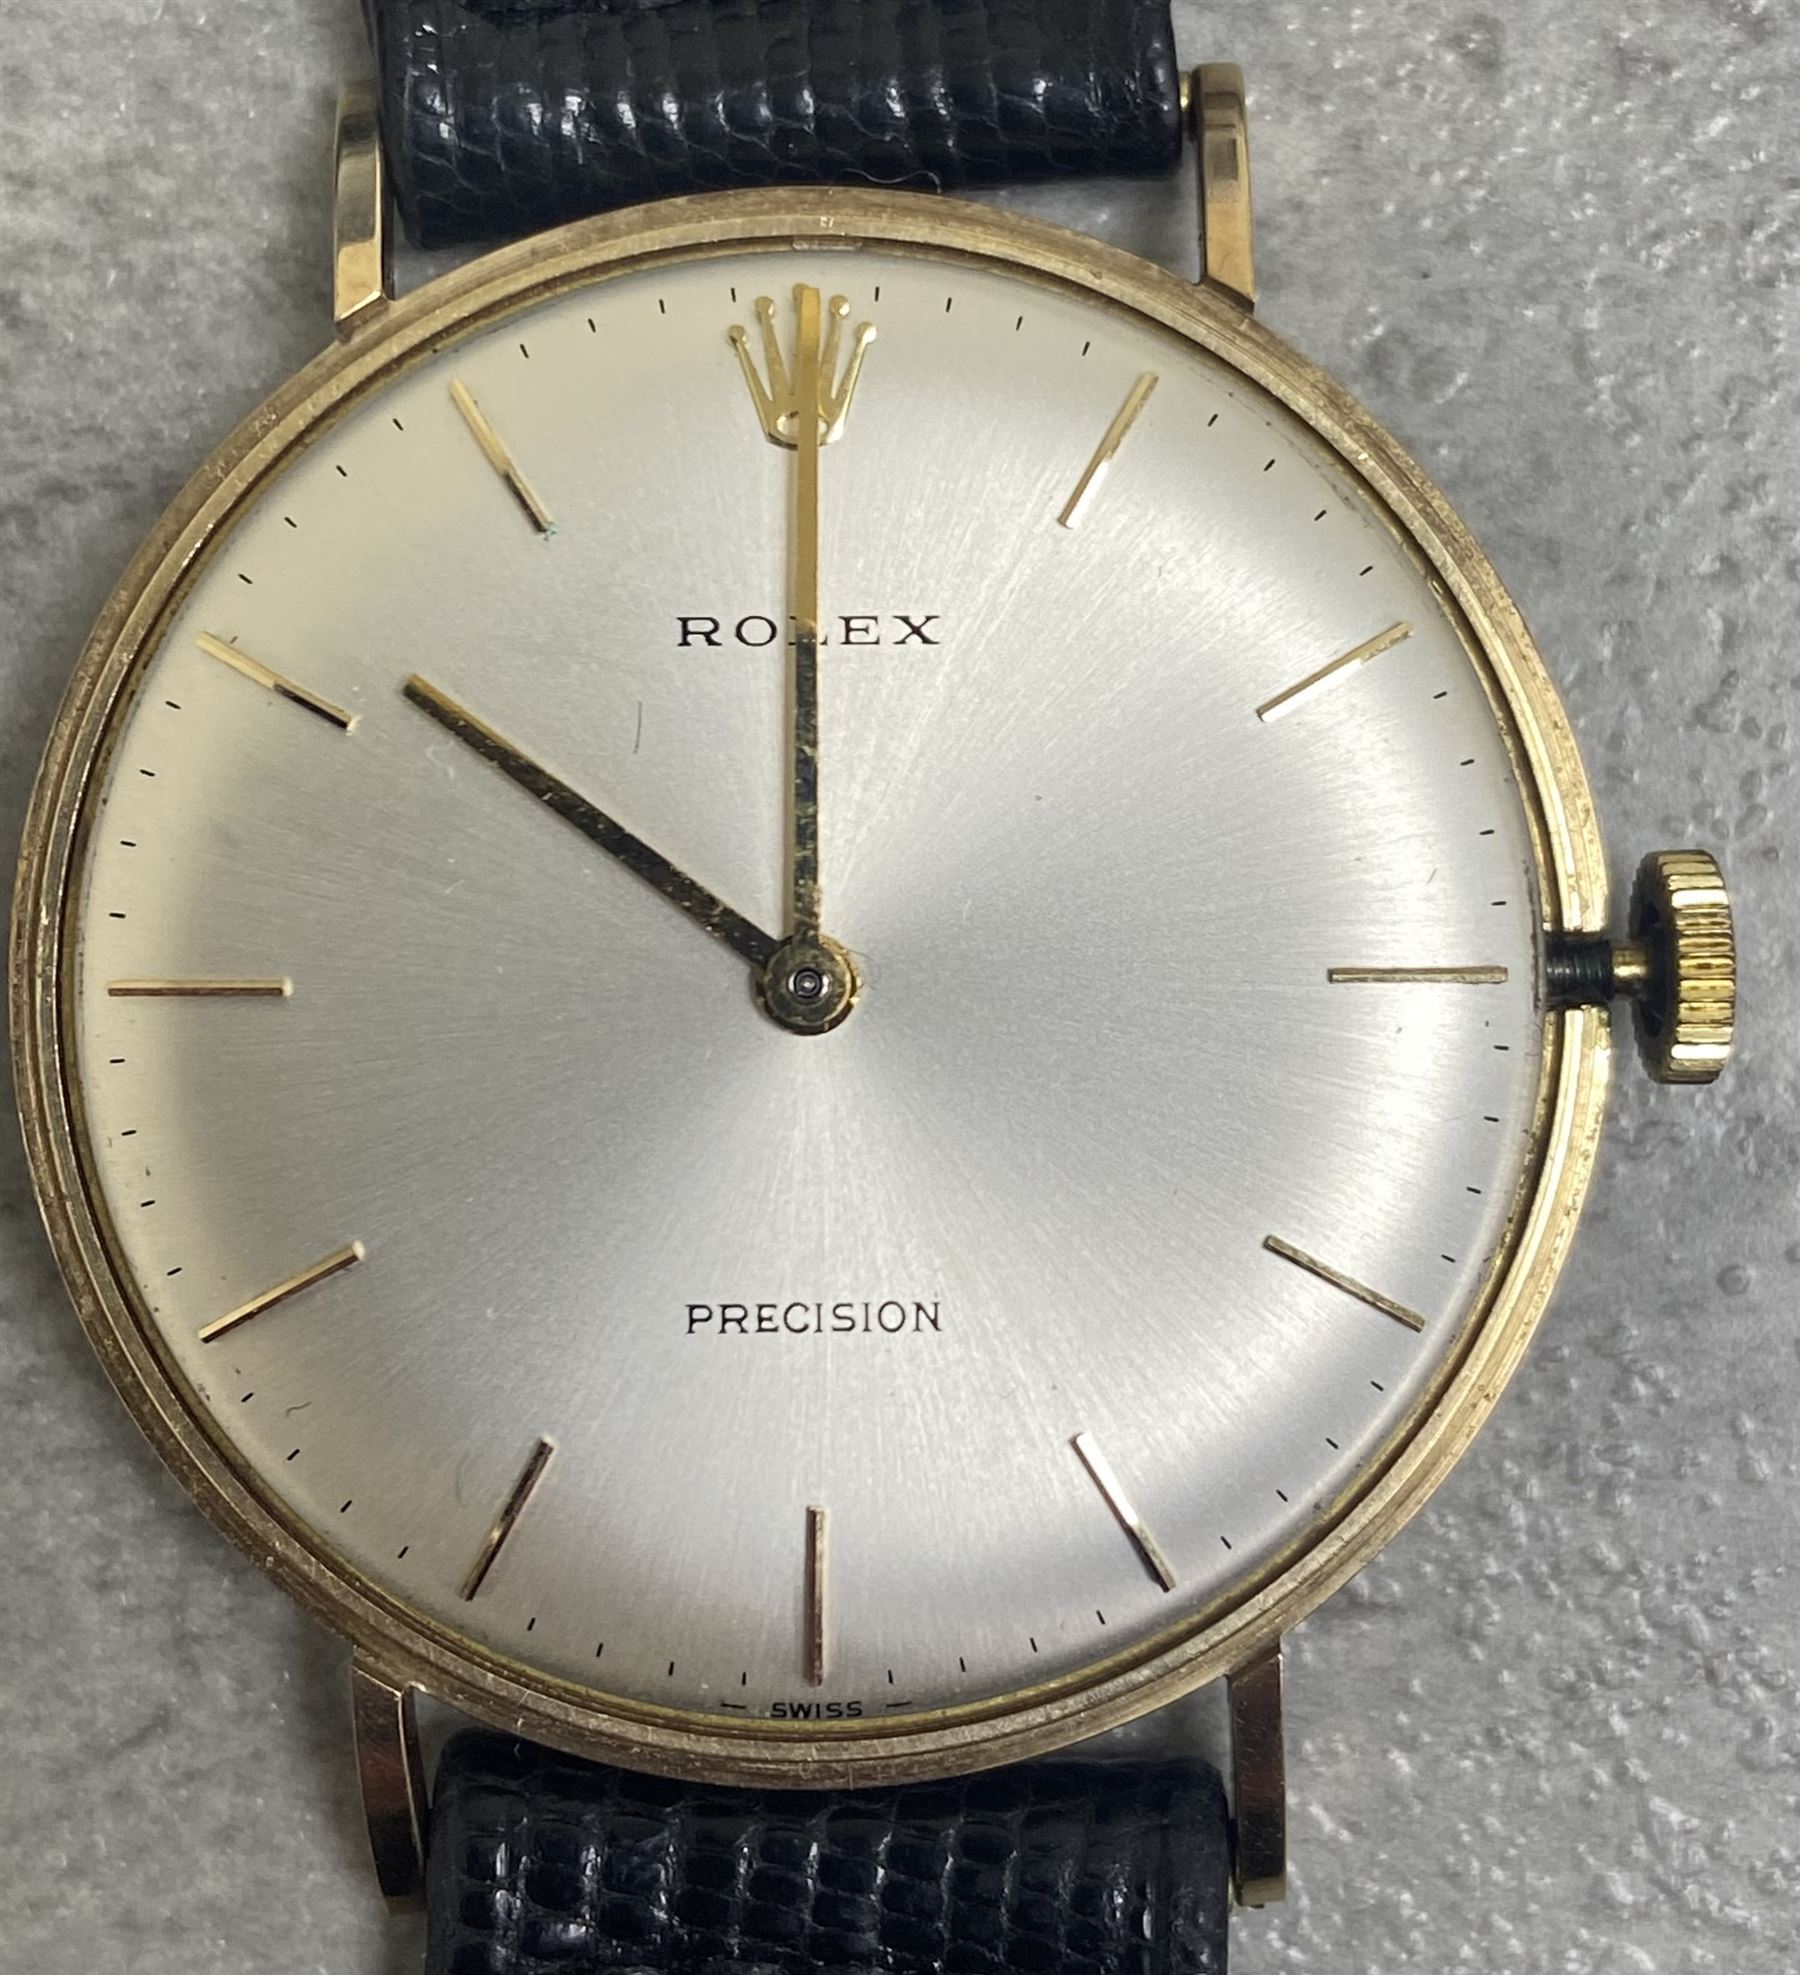 Rolex Precision gentleman's 9ct gold manual wind presentation wristwatch - Image 8 of 8